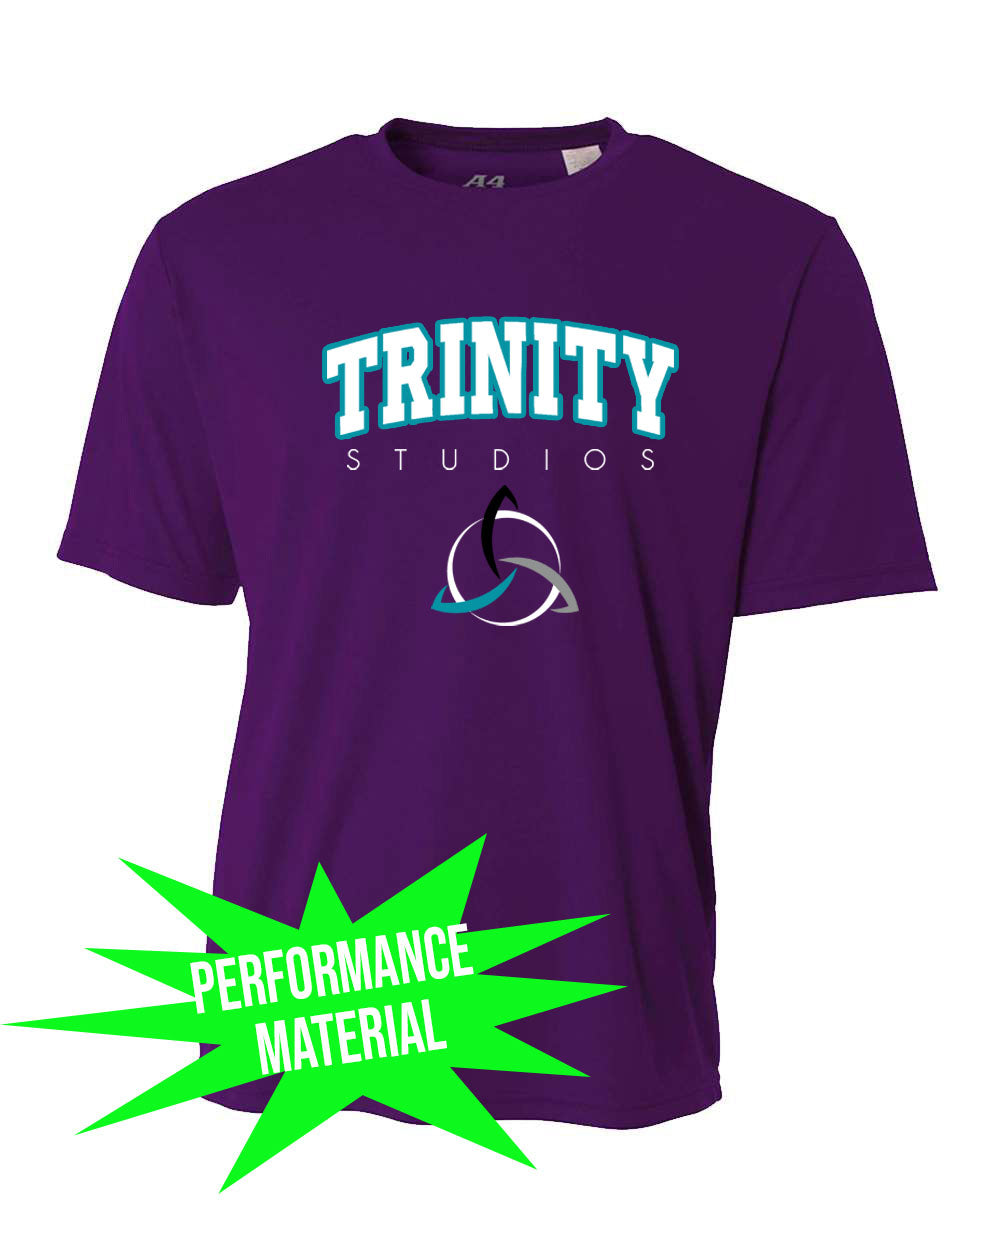 Trinity Studios Design 5 Performance material T-Shirt